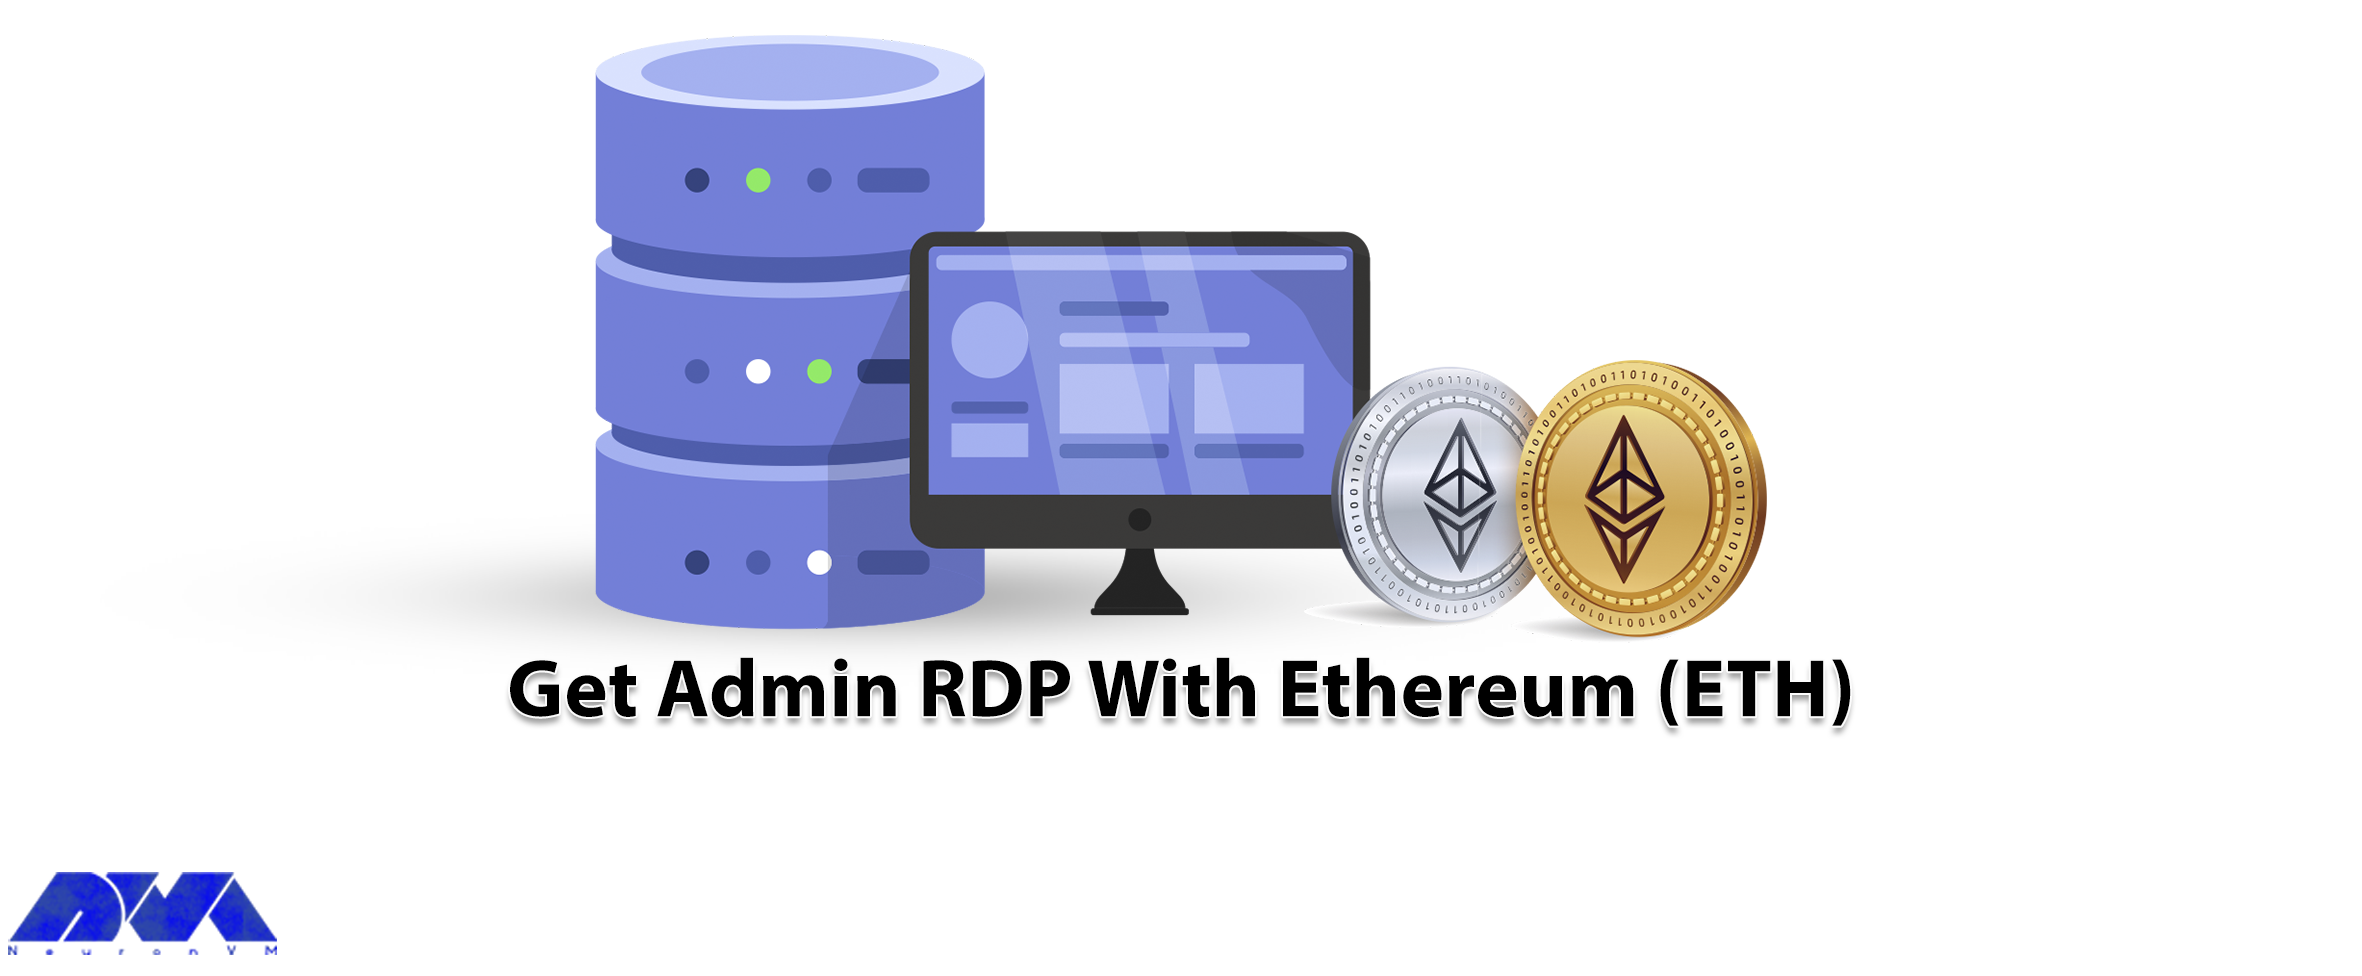 Get Admin RDP with Ethereum (ETH) - NeuronVM